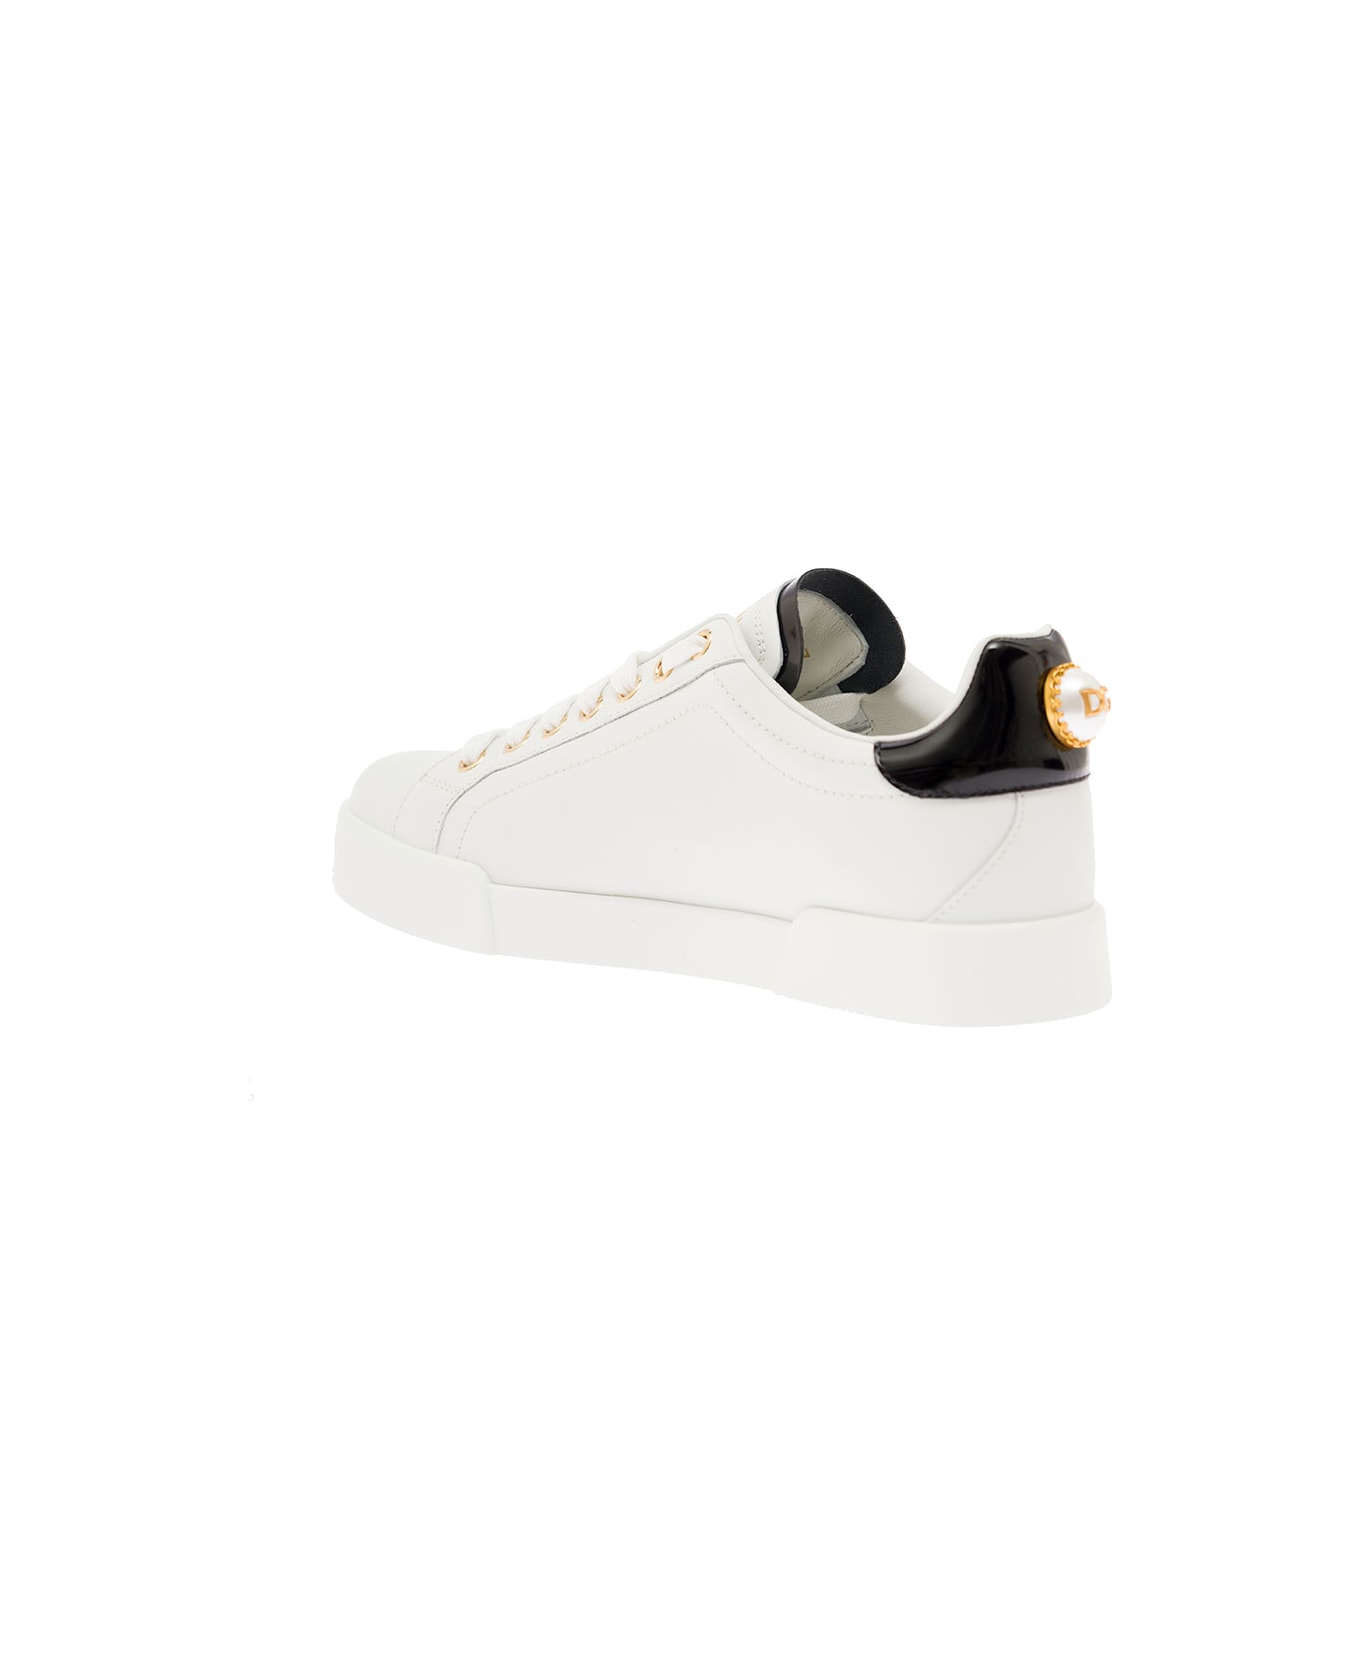 Dolce & Gabbana Woman's Portofino White Leather Sneakers - White スニーカー